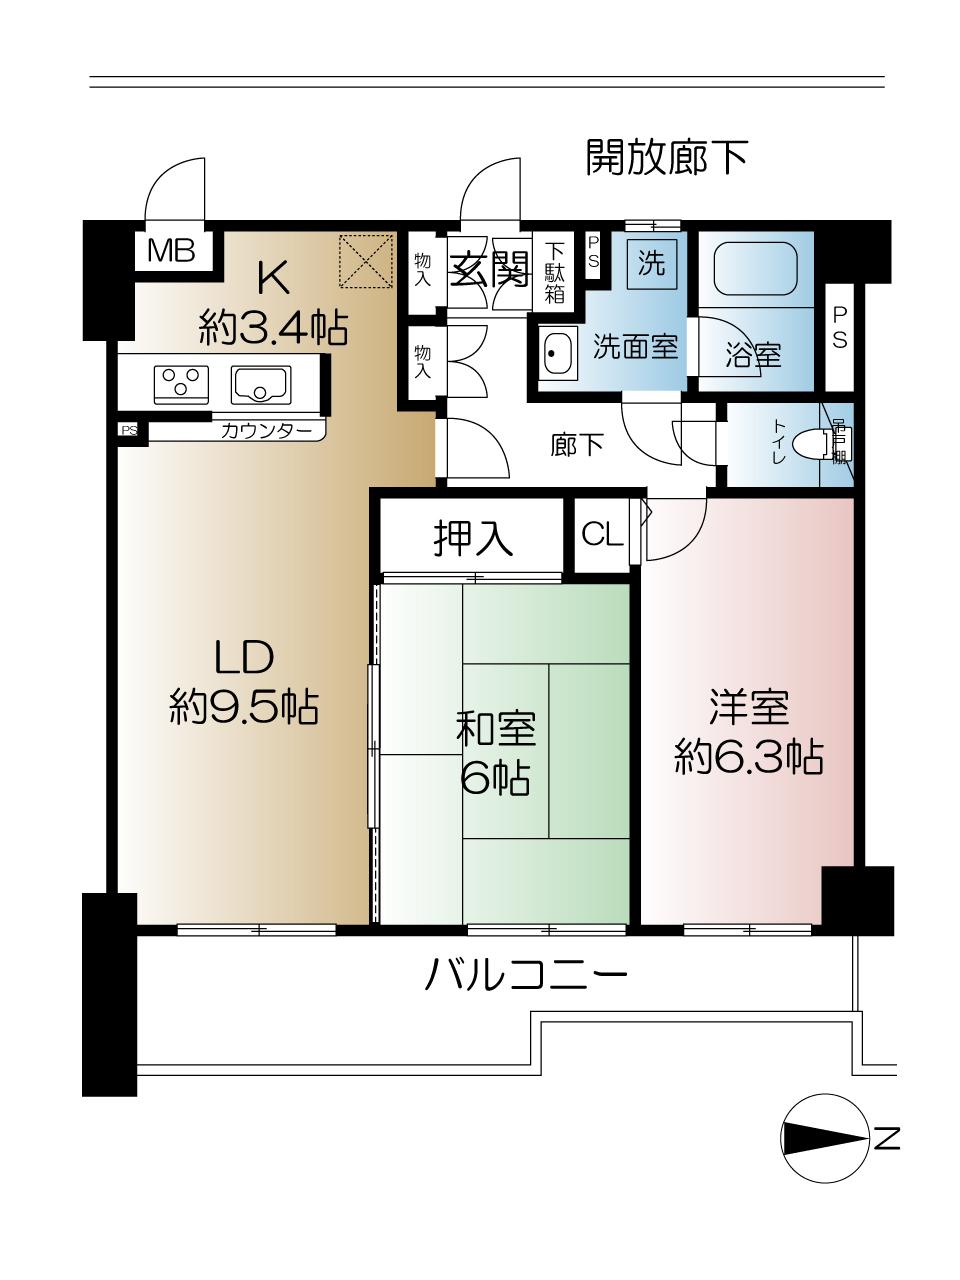 Floor plan. 2LDK, Price 28.5 million yen, Occupied area 56.94 sq m , Balcony area 10 sq m